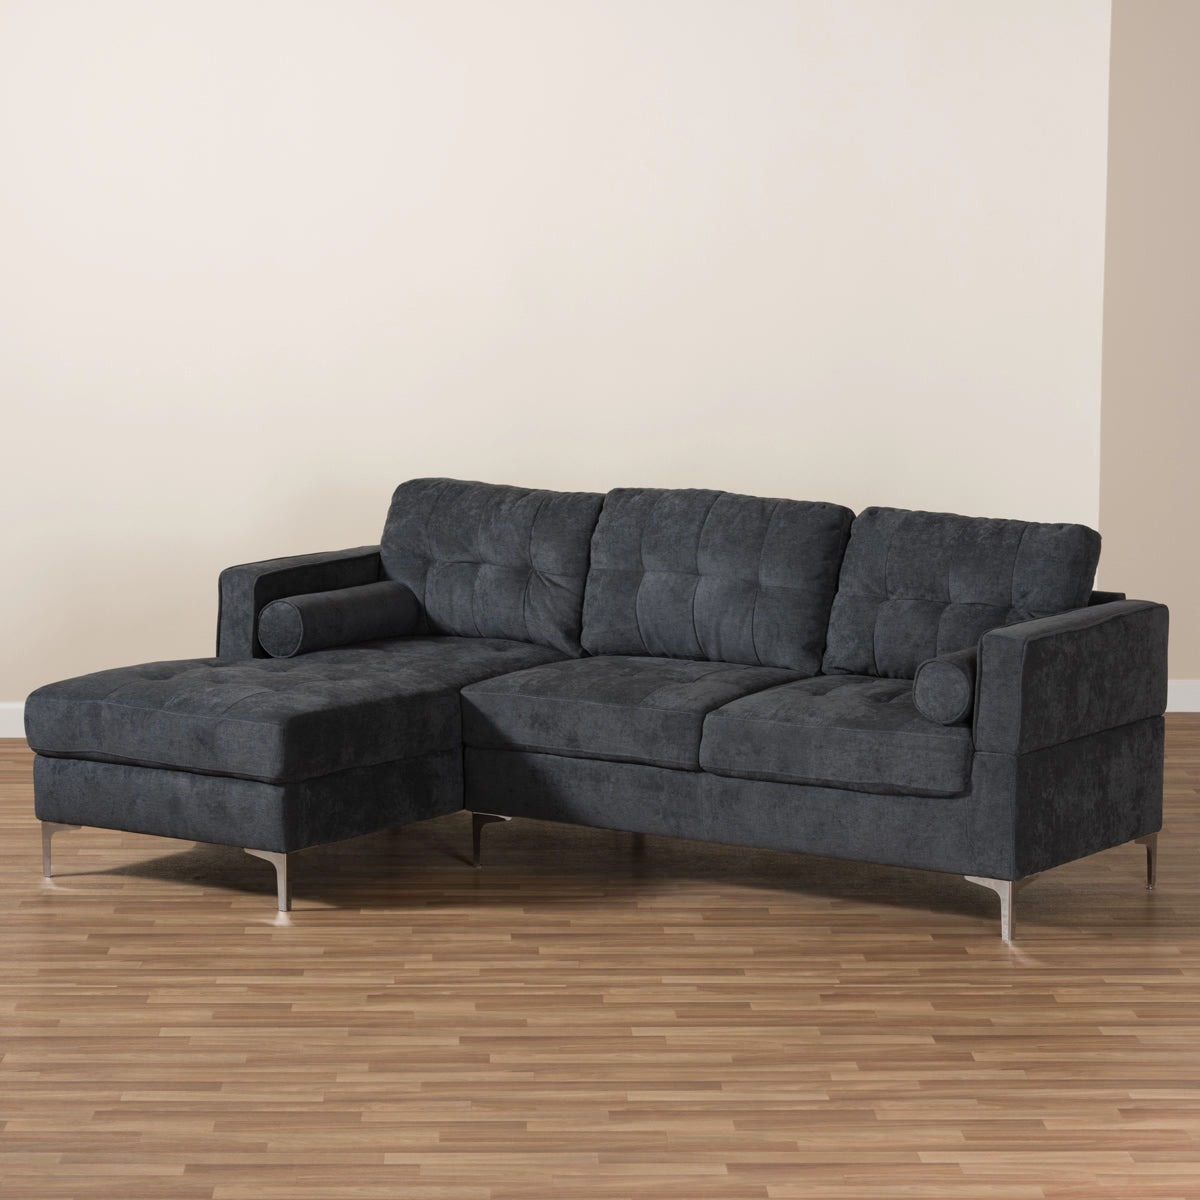 Baxton Studio Mireille Modern and Contemporary Dark Grey Fabric Upholstered Sectional Sofa Baxton Studio-sofas-Minimal And Modern - 5